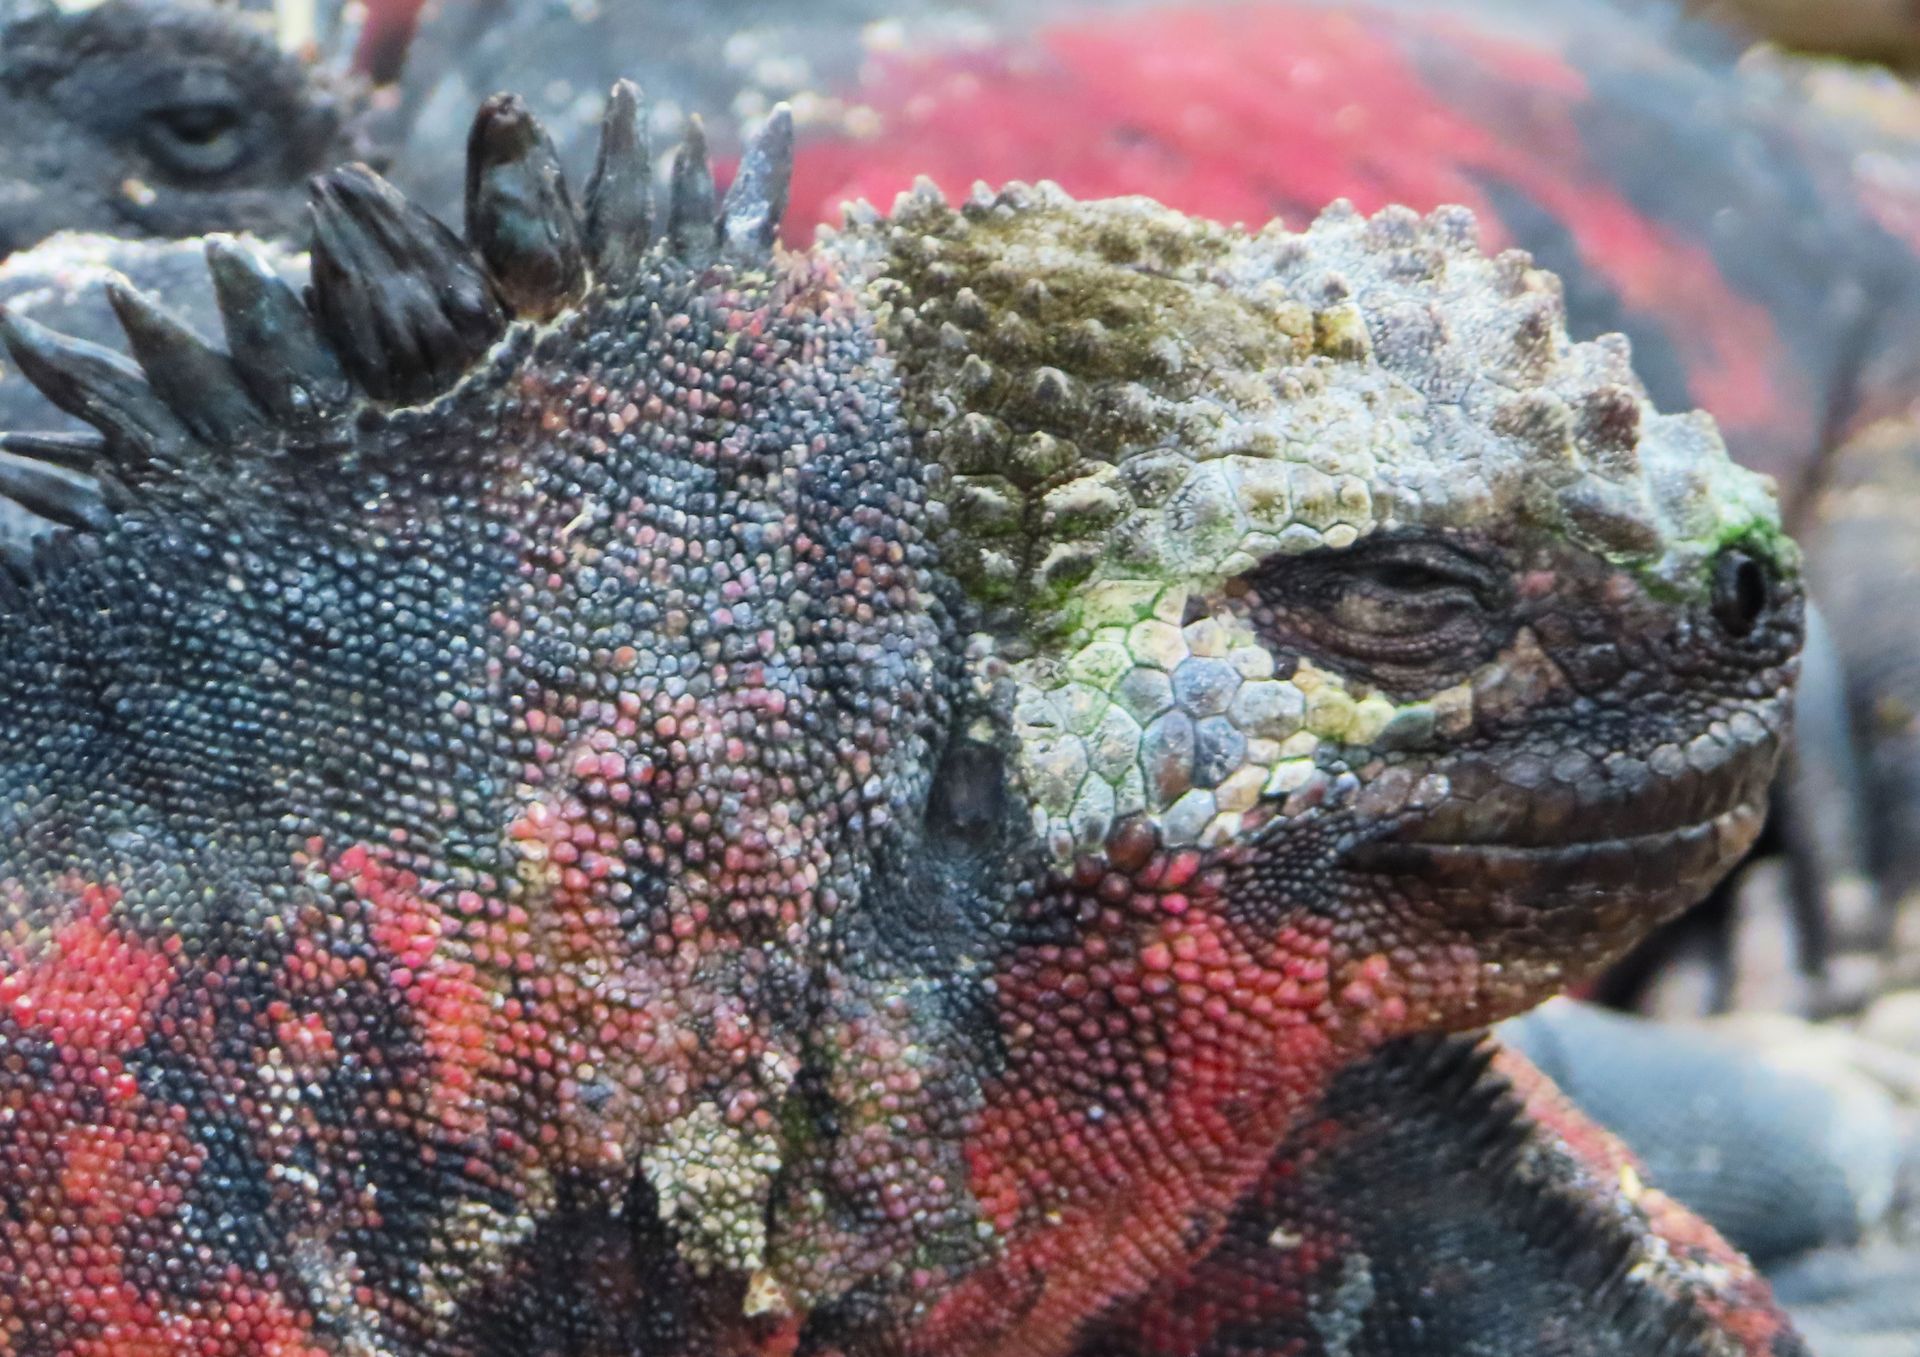 a close up of a marine Iguanas lizard 's face and neck